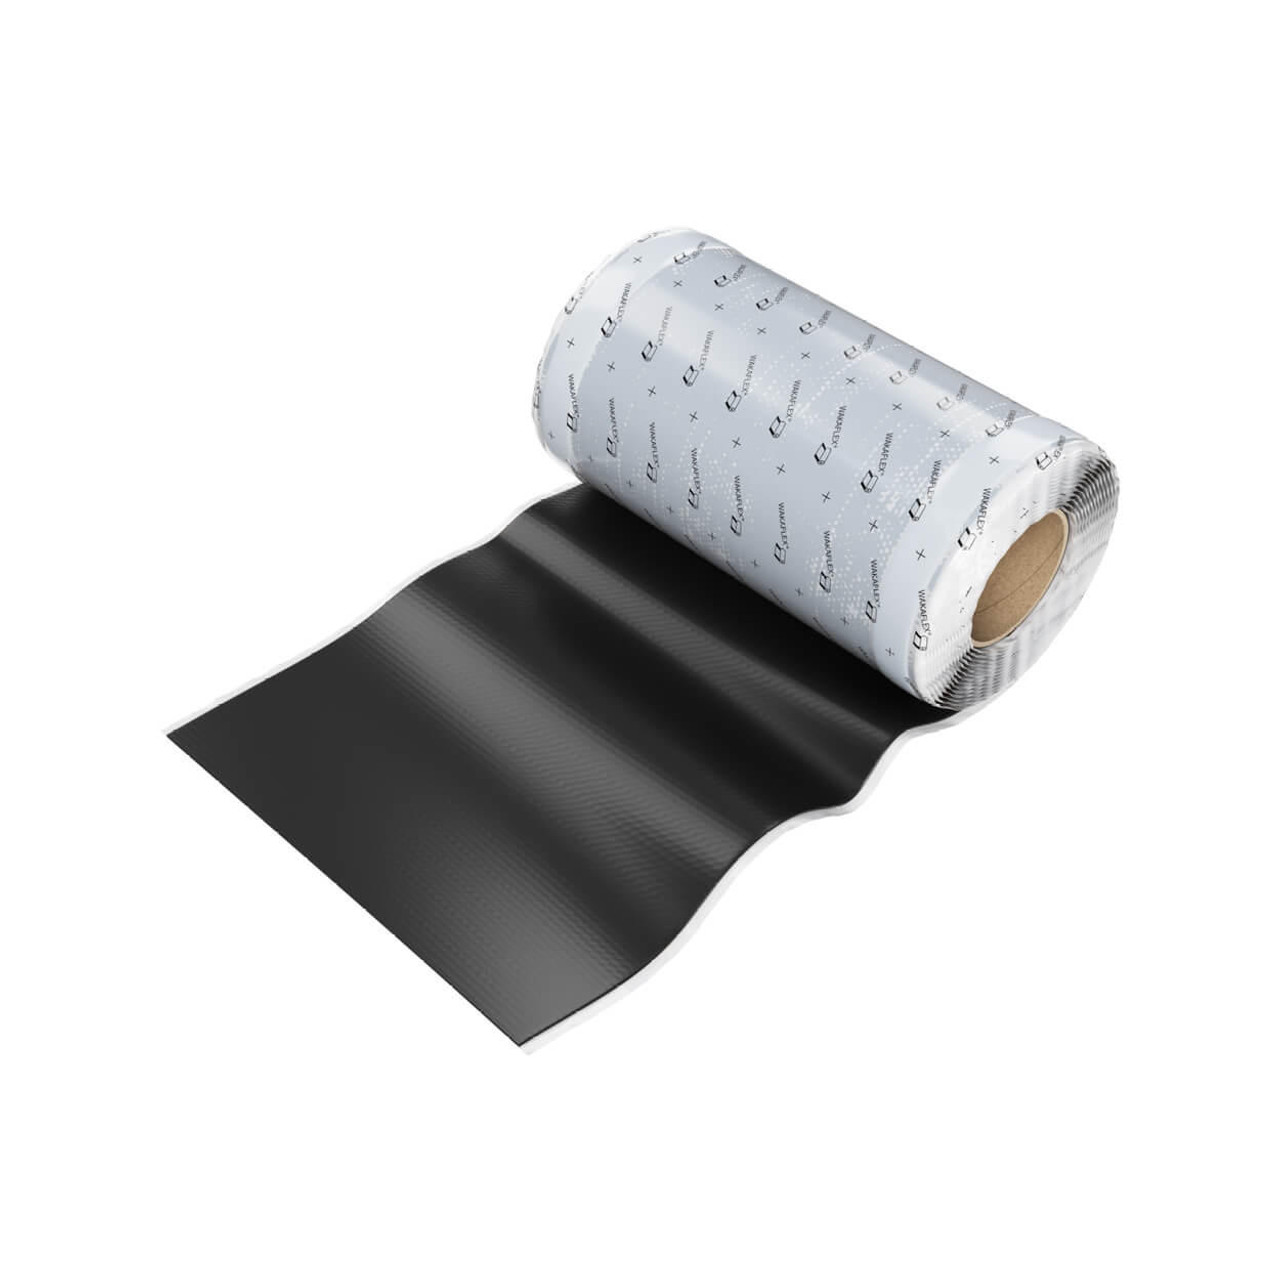  Wakaflex Lead-free Adhesive Roof Flashing Roll 560mm x 5m 